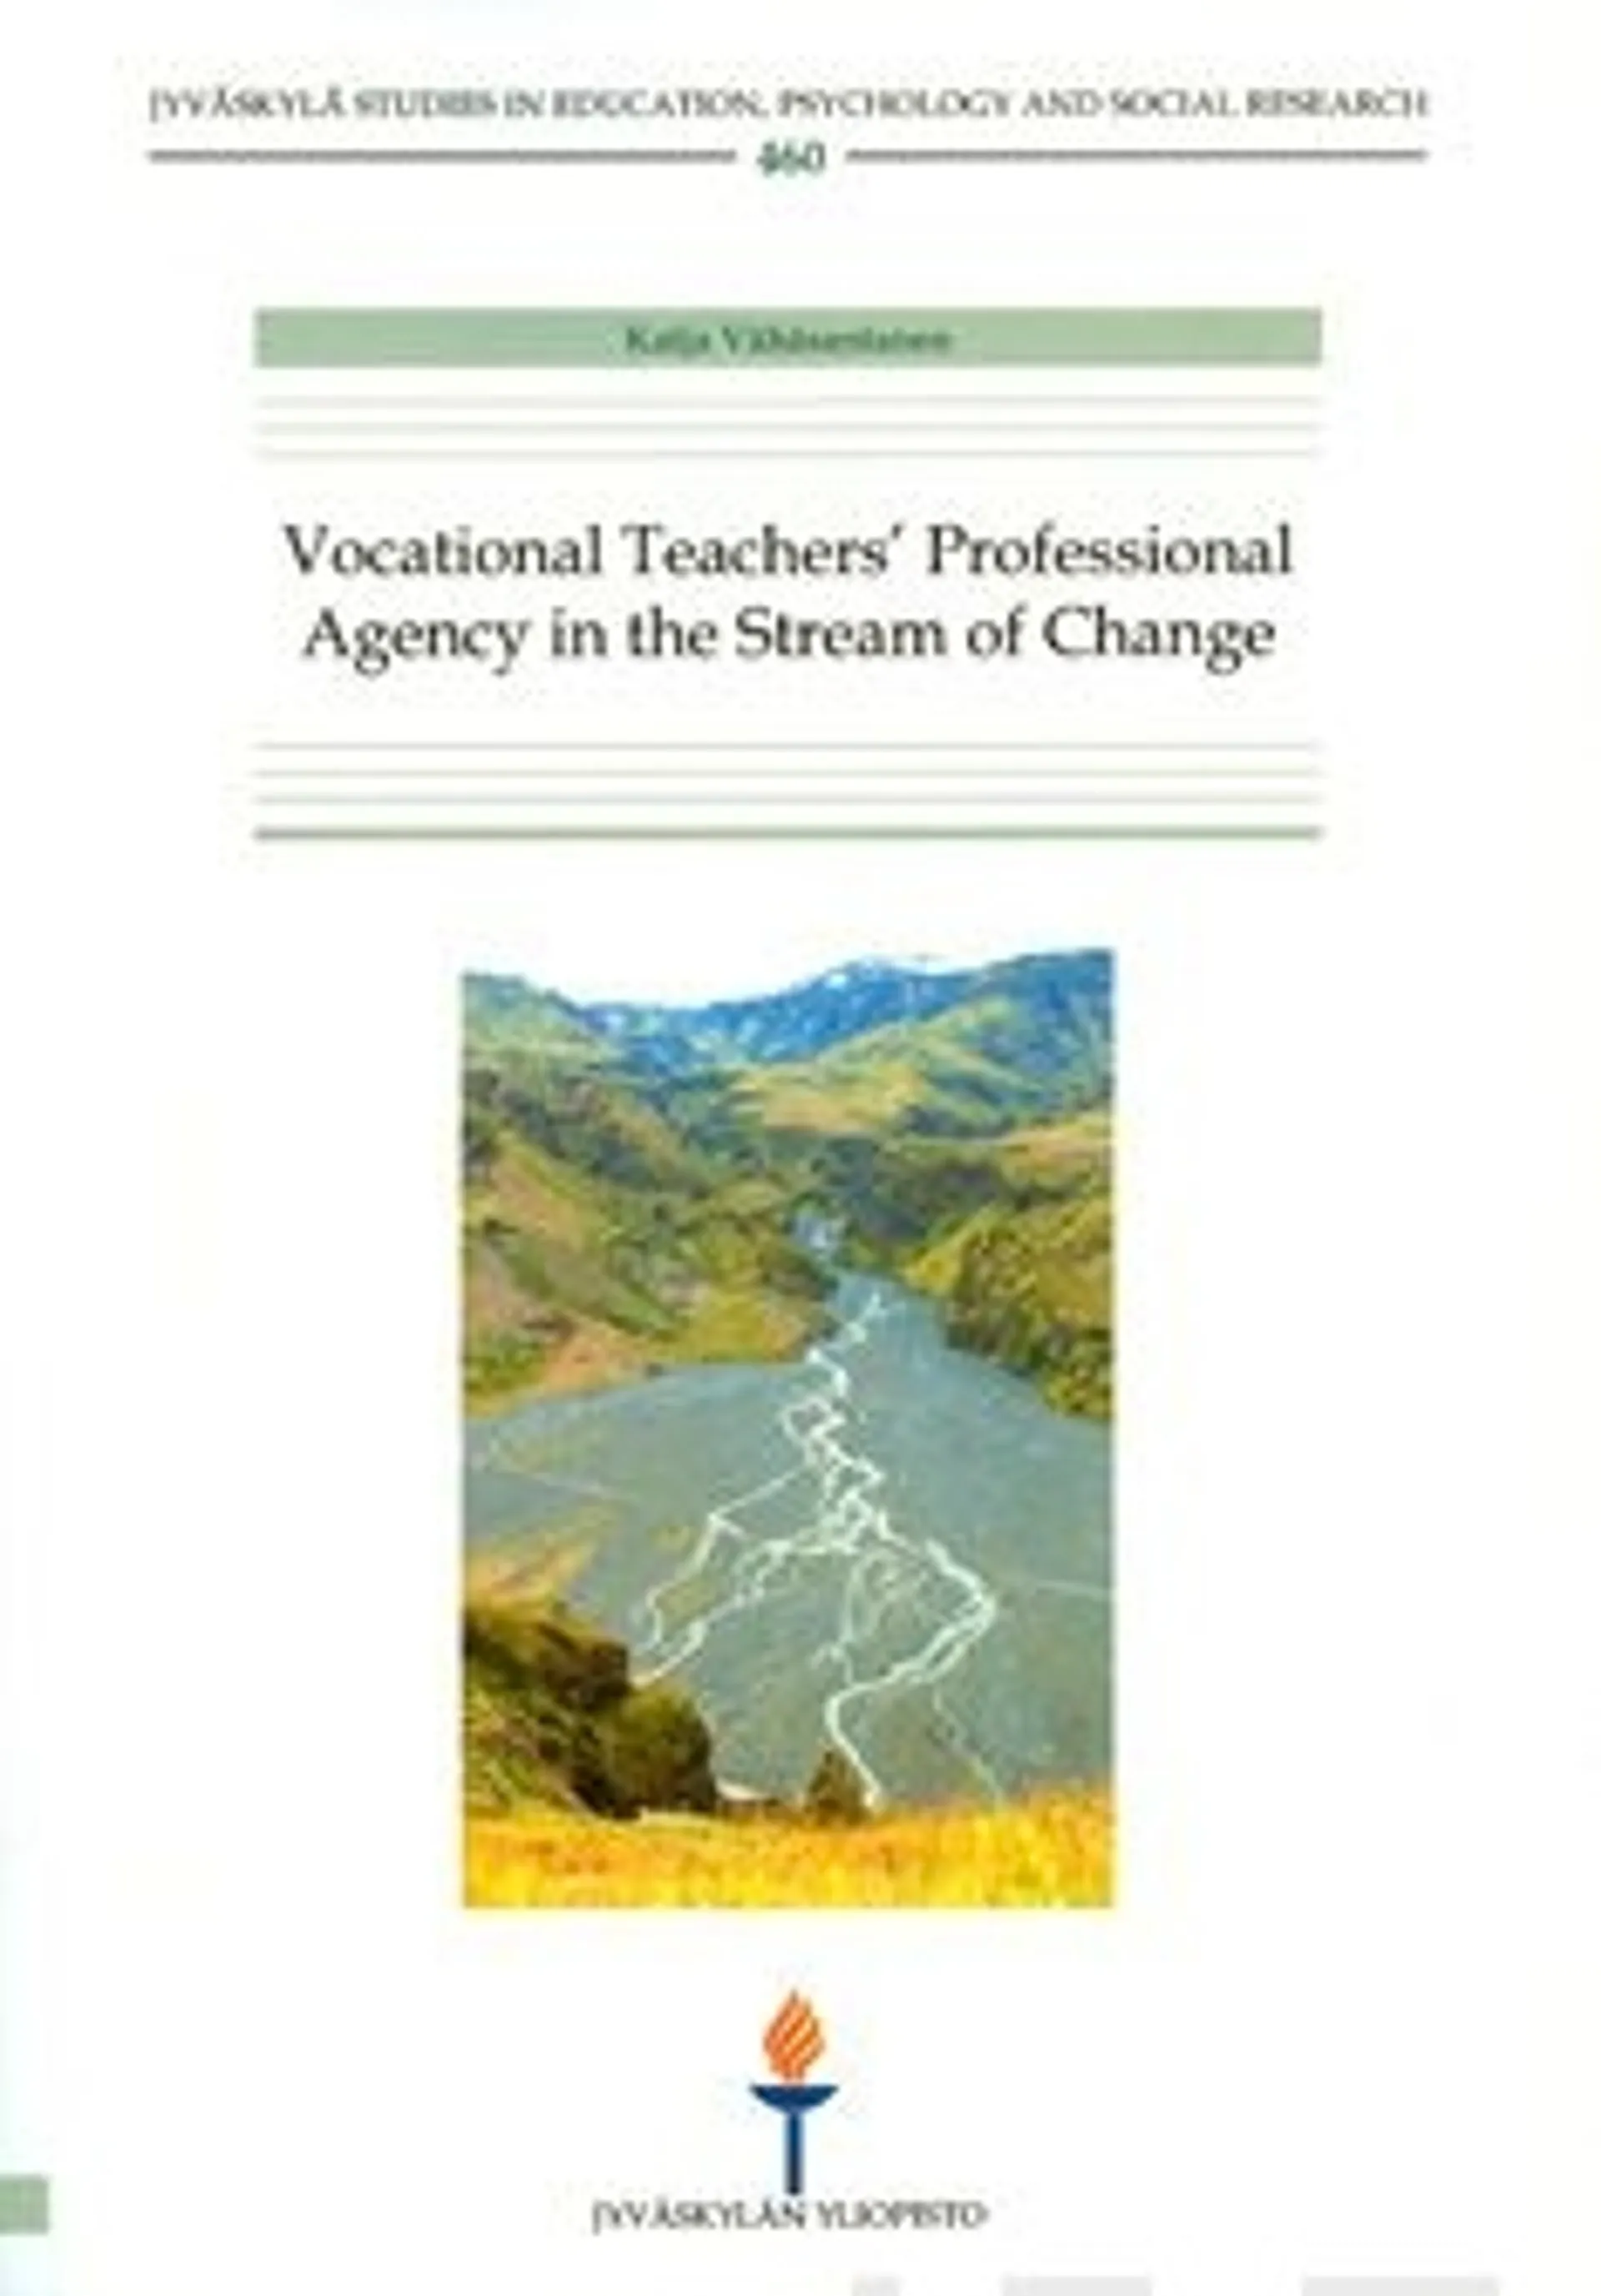 Vähäsantanen, Vocational teachers' professional agency in the stream of change